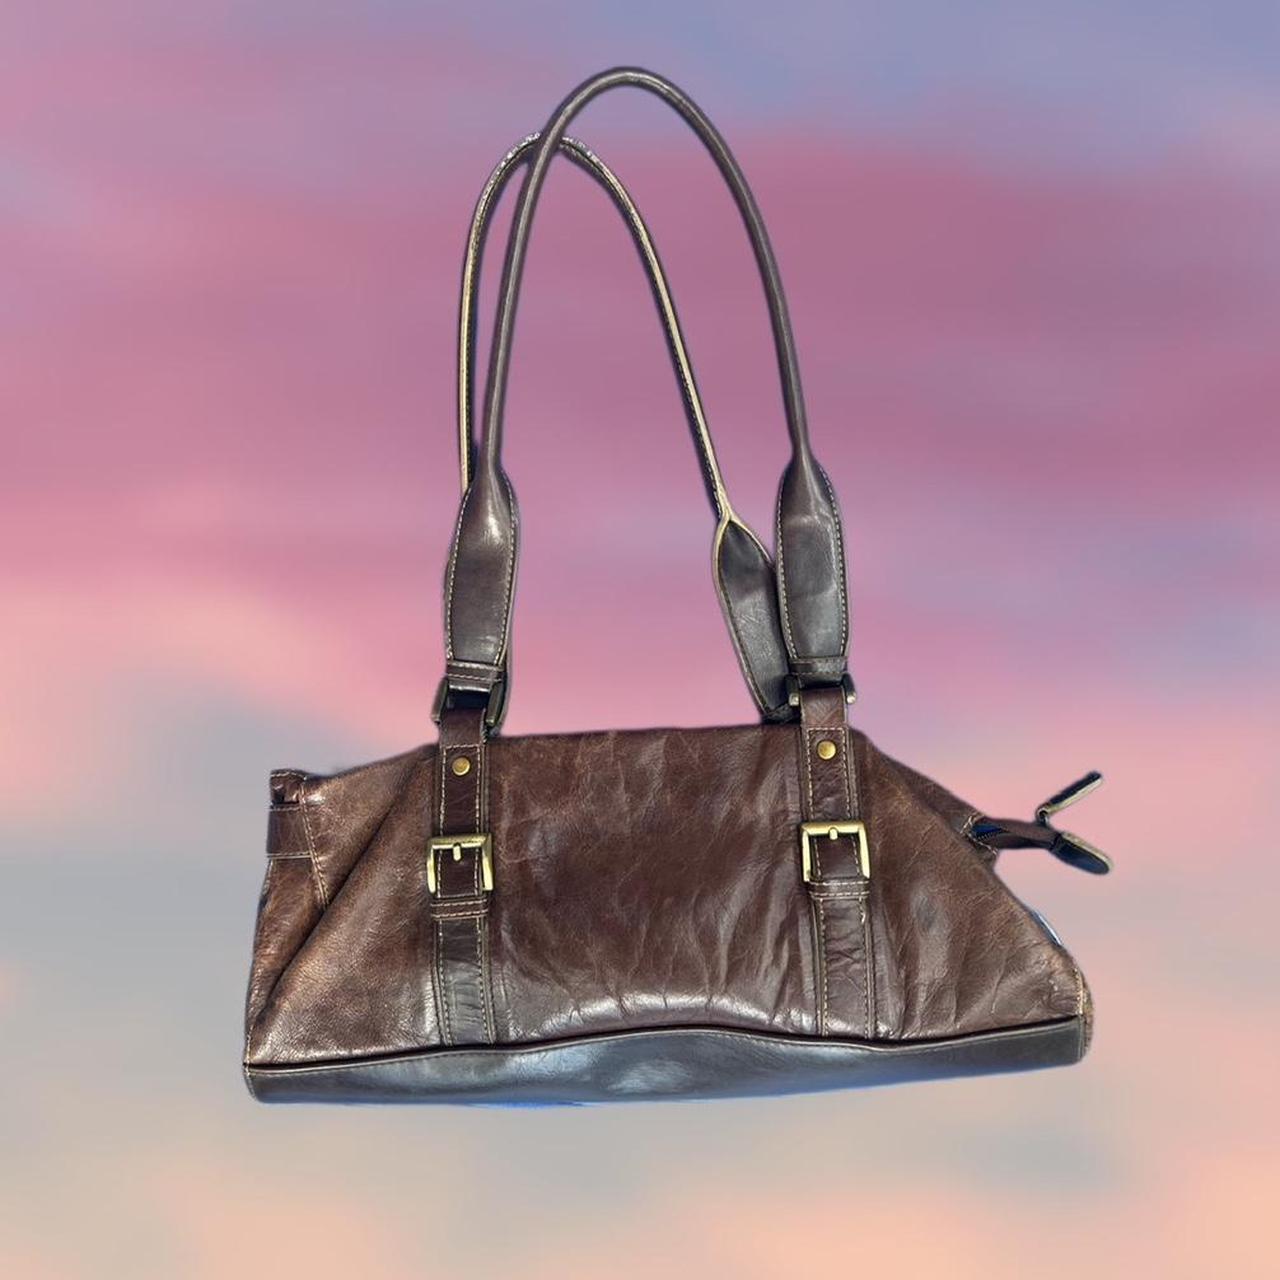 Giani Bernini Handbags : Bags & Accessories | Red - Walmart.com